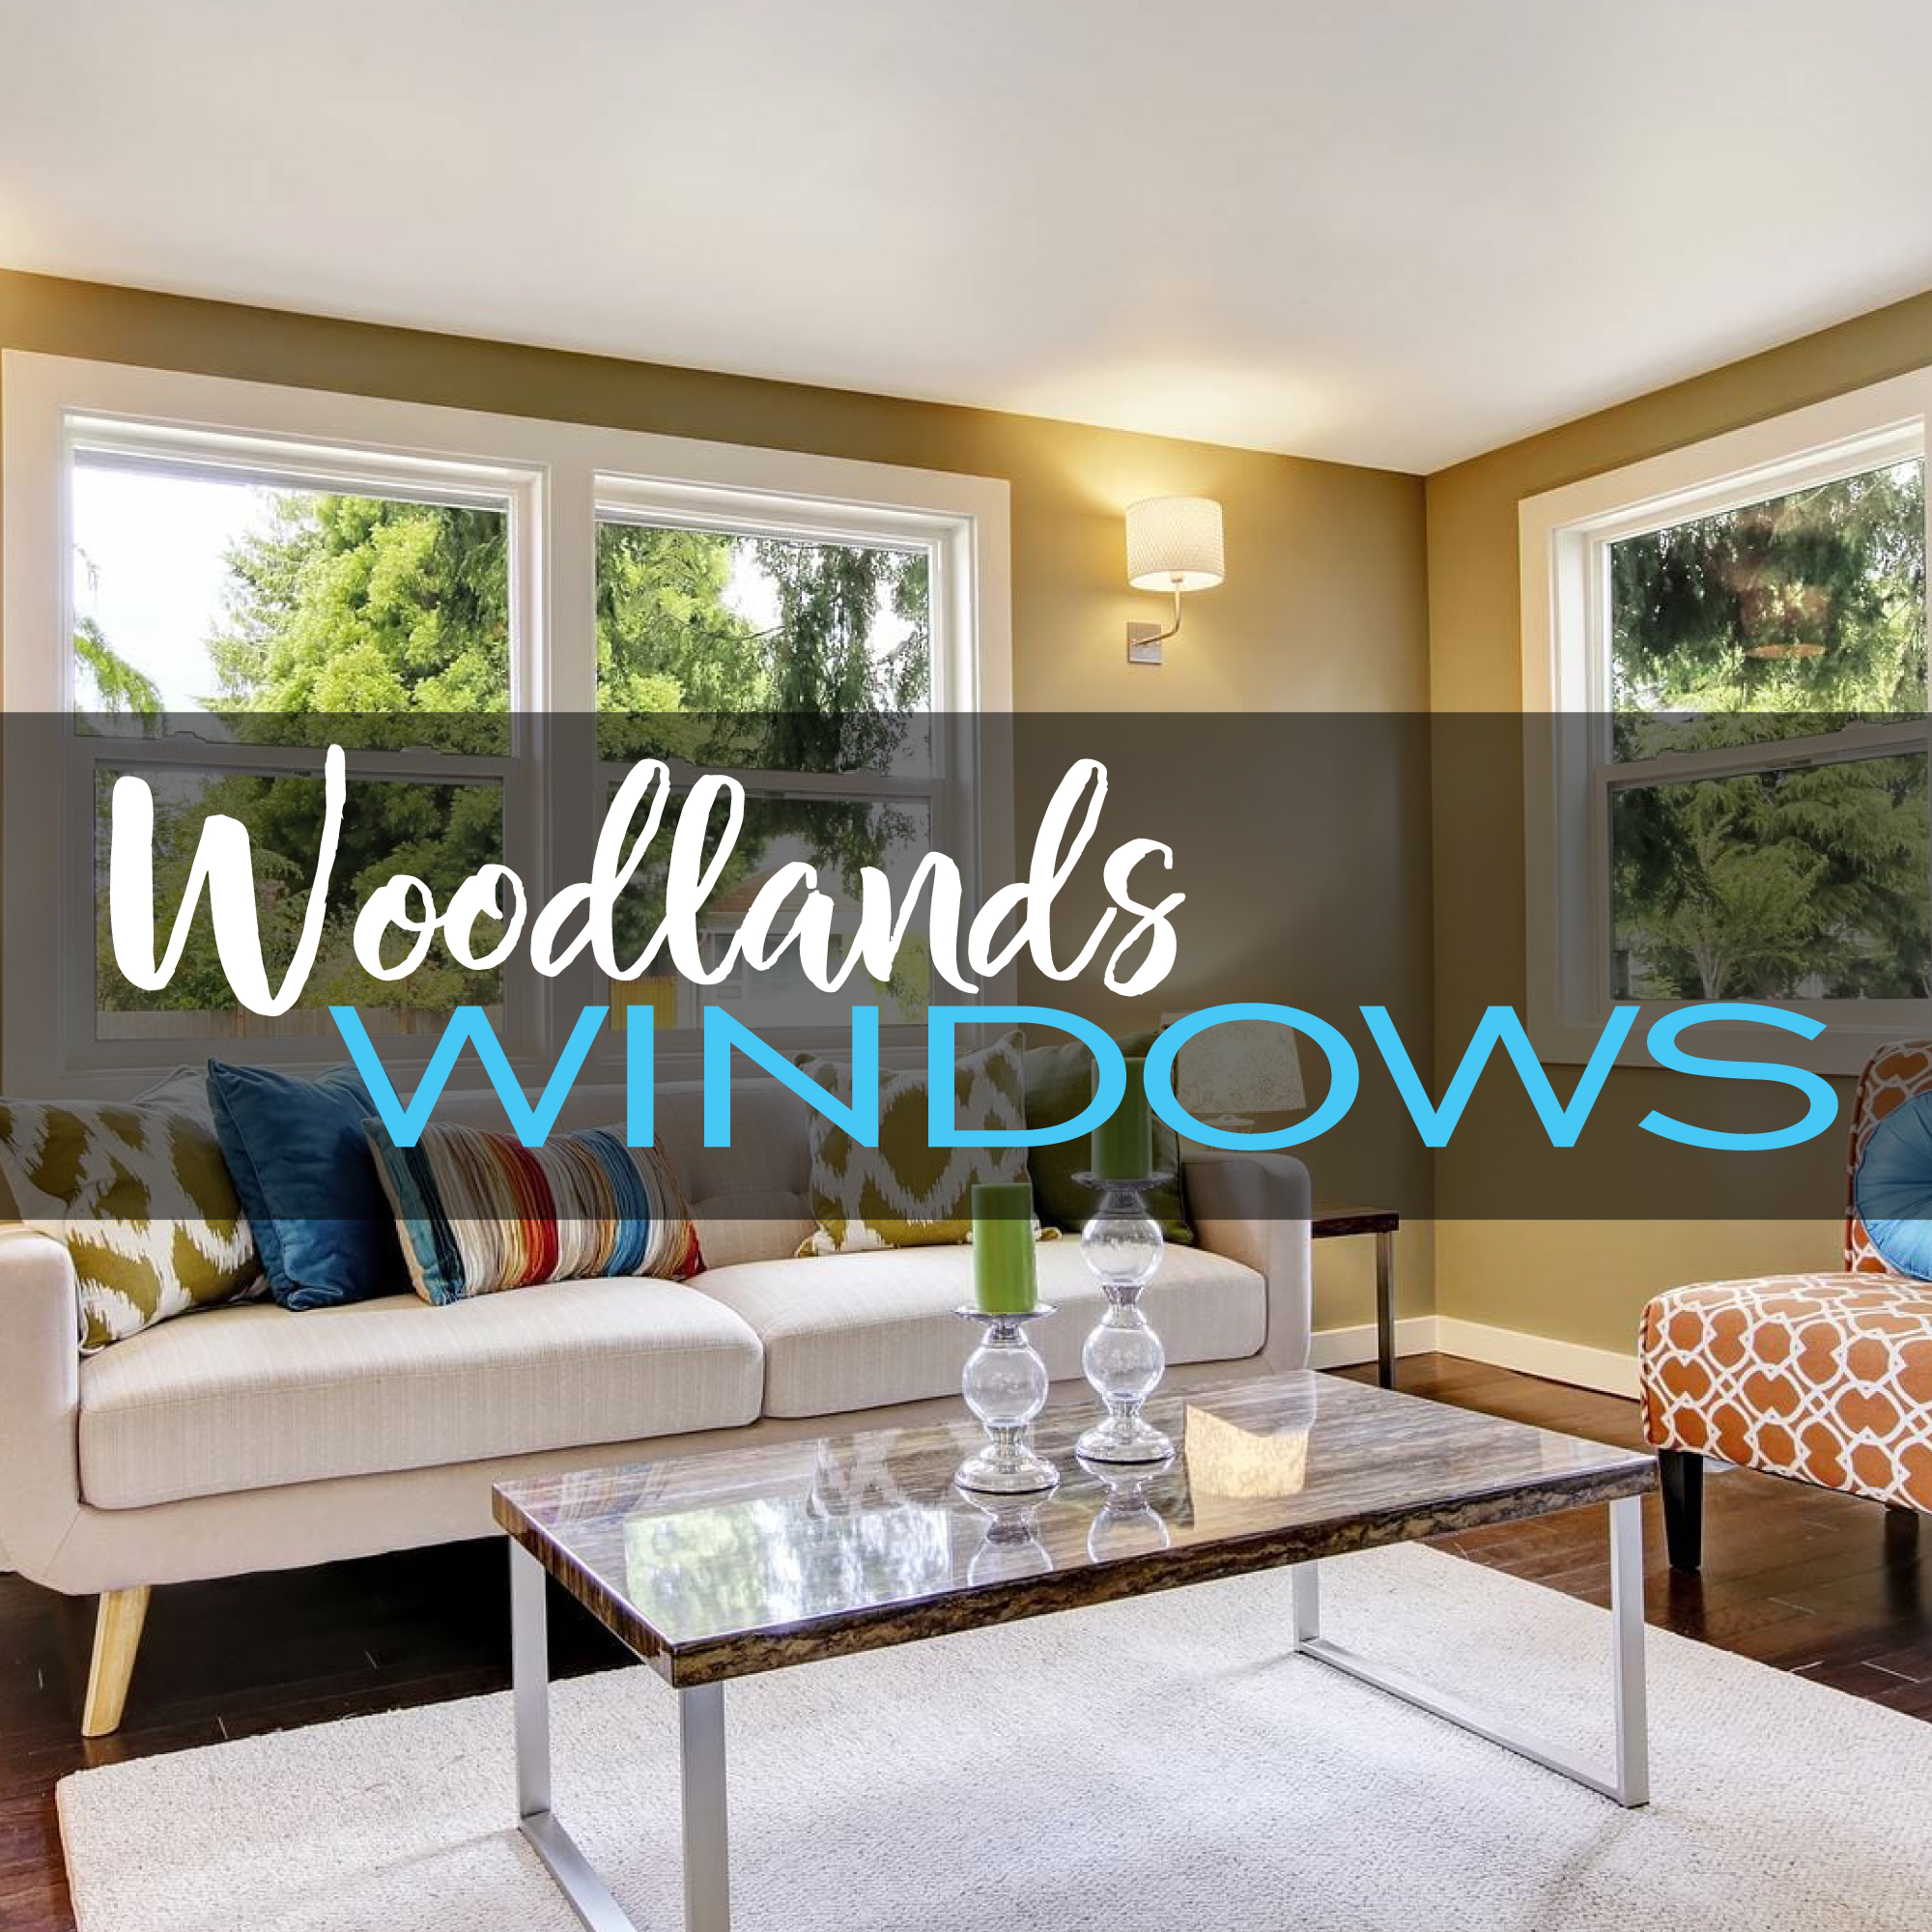 The Woodlands Windows